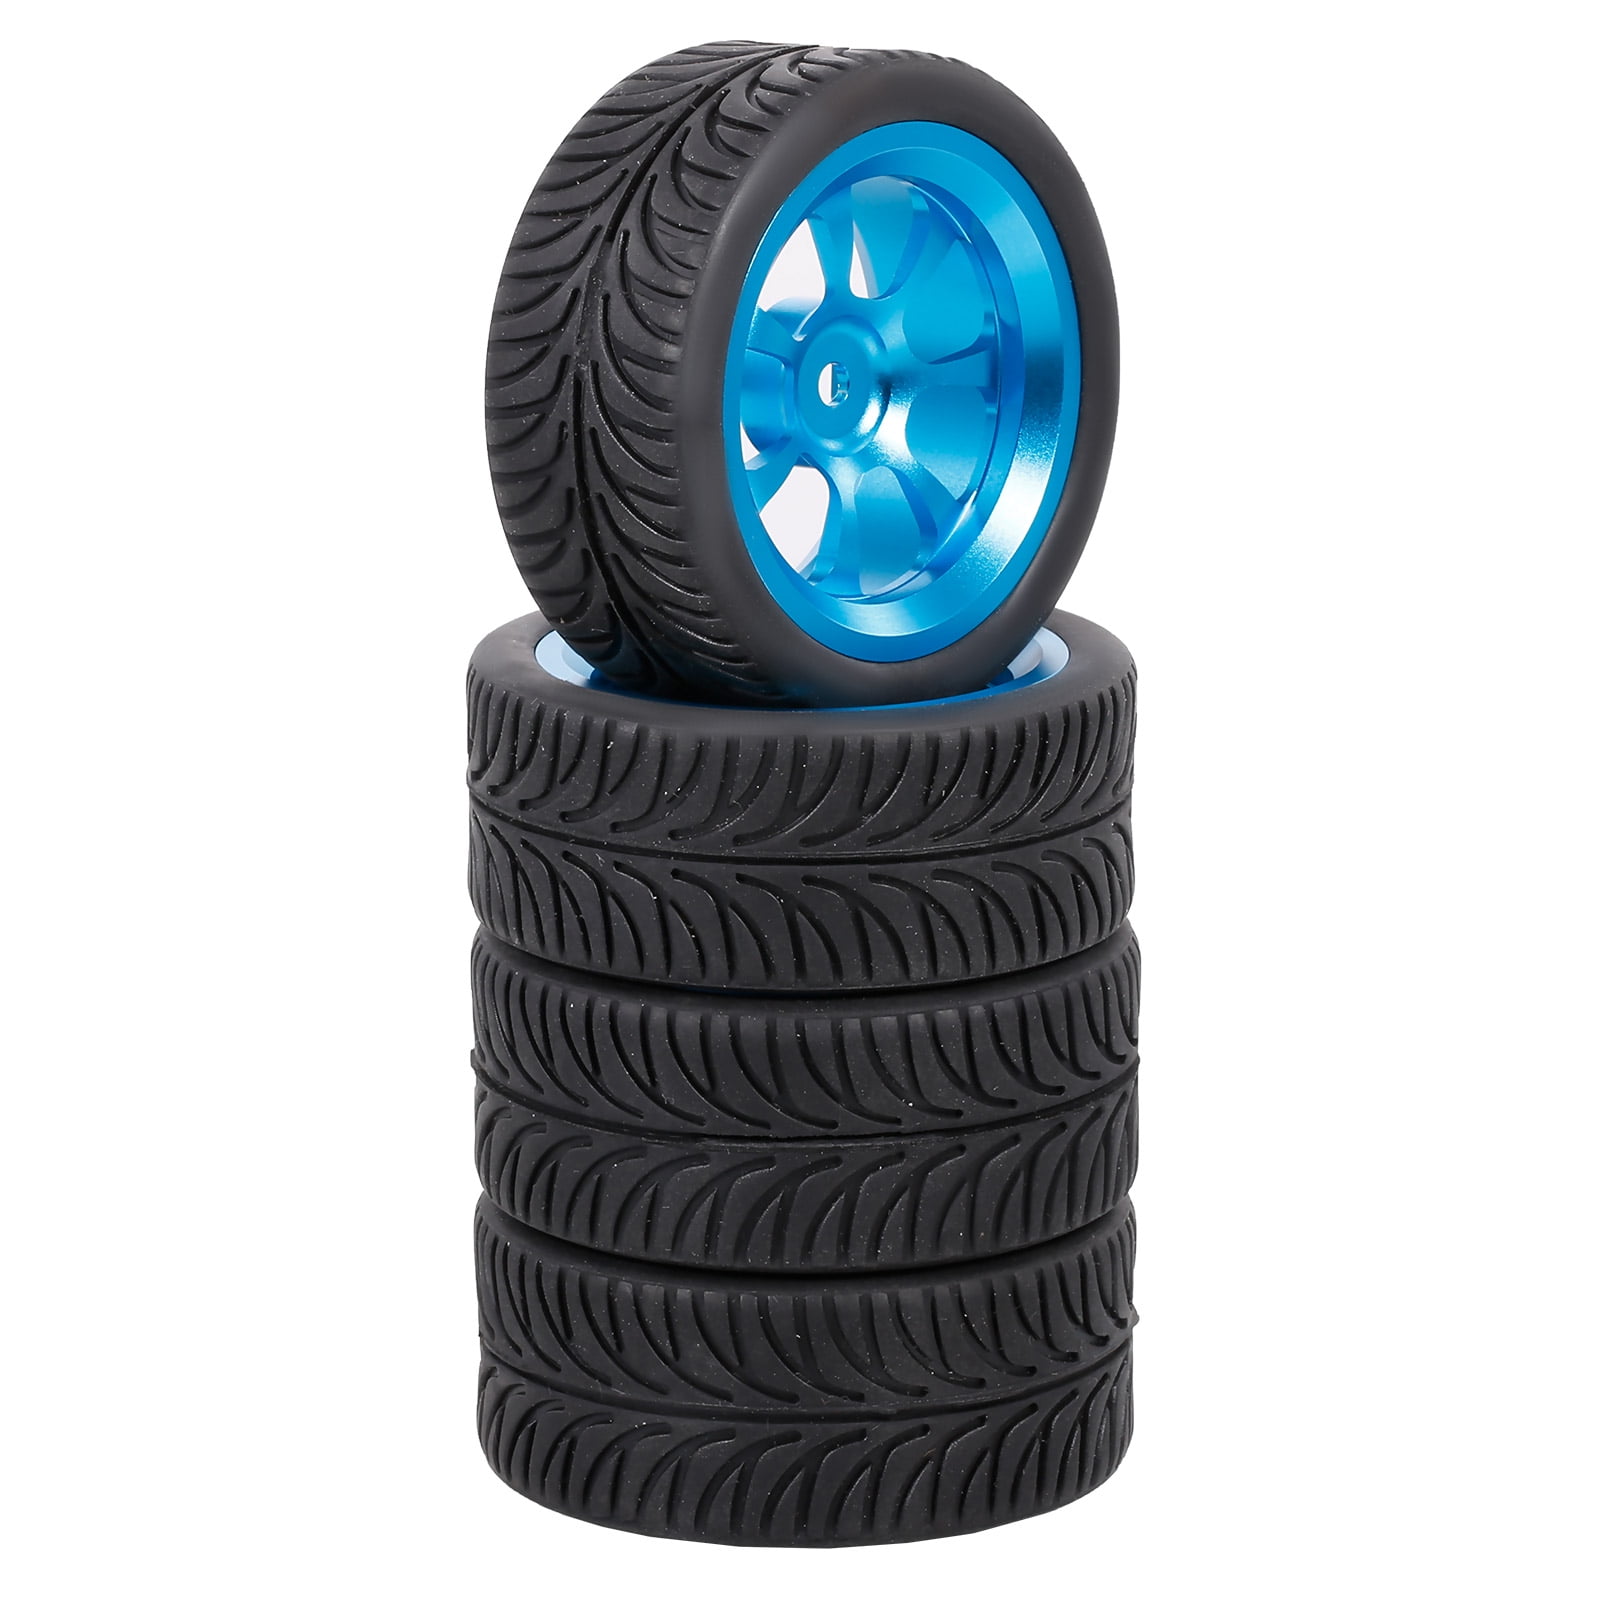 A-alloy Rims & Tires RC Car Wheels For 1/18 Scale Soft Rubber/Wheels w/Foams!